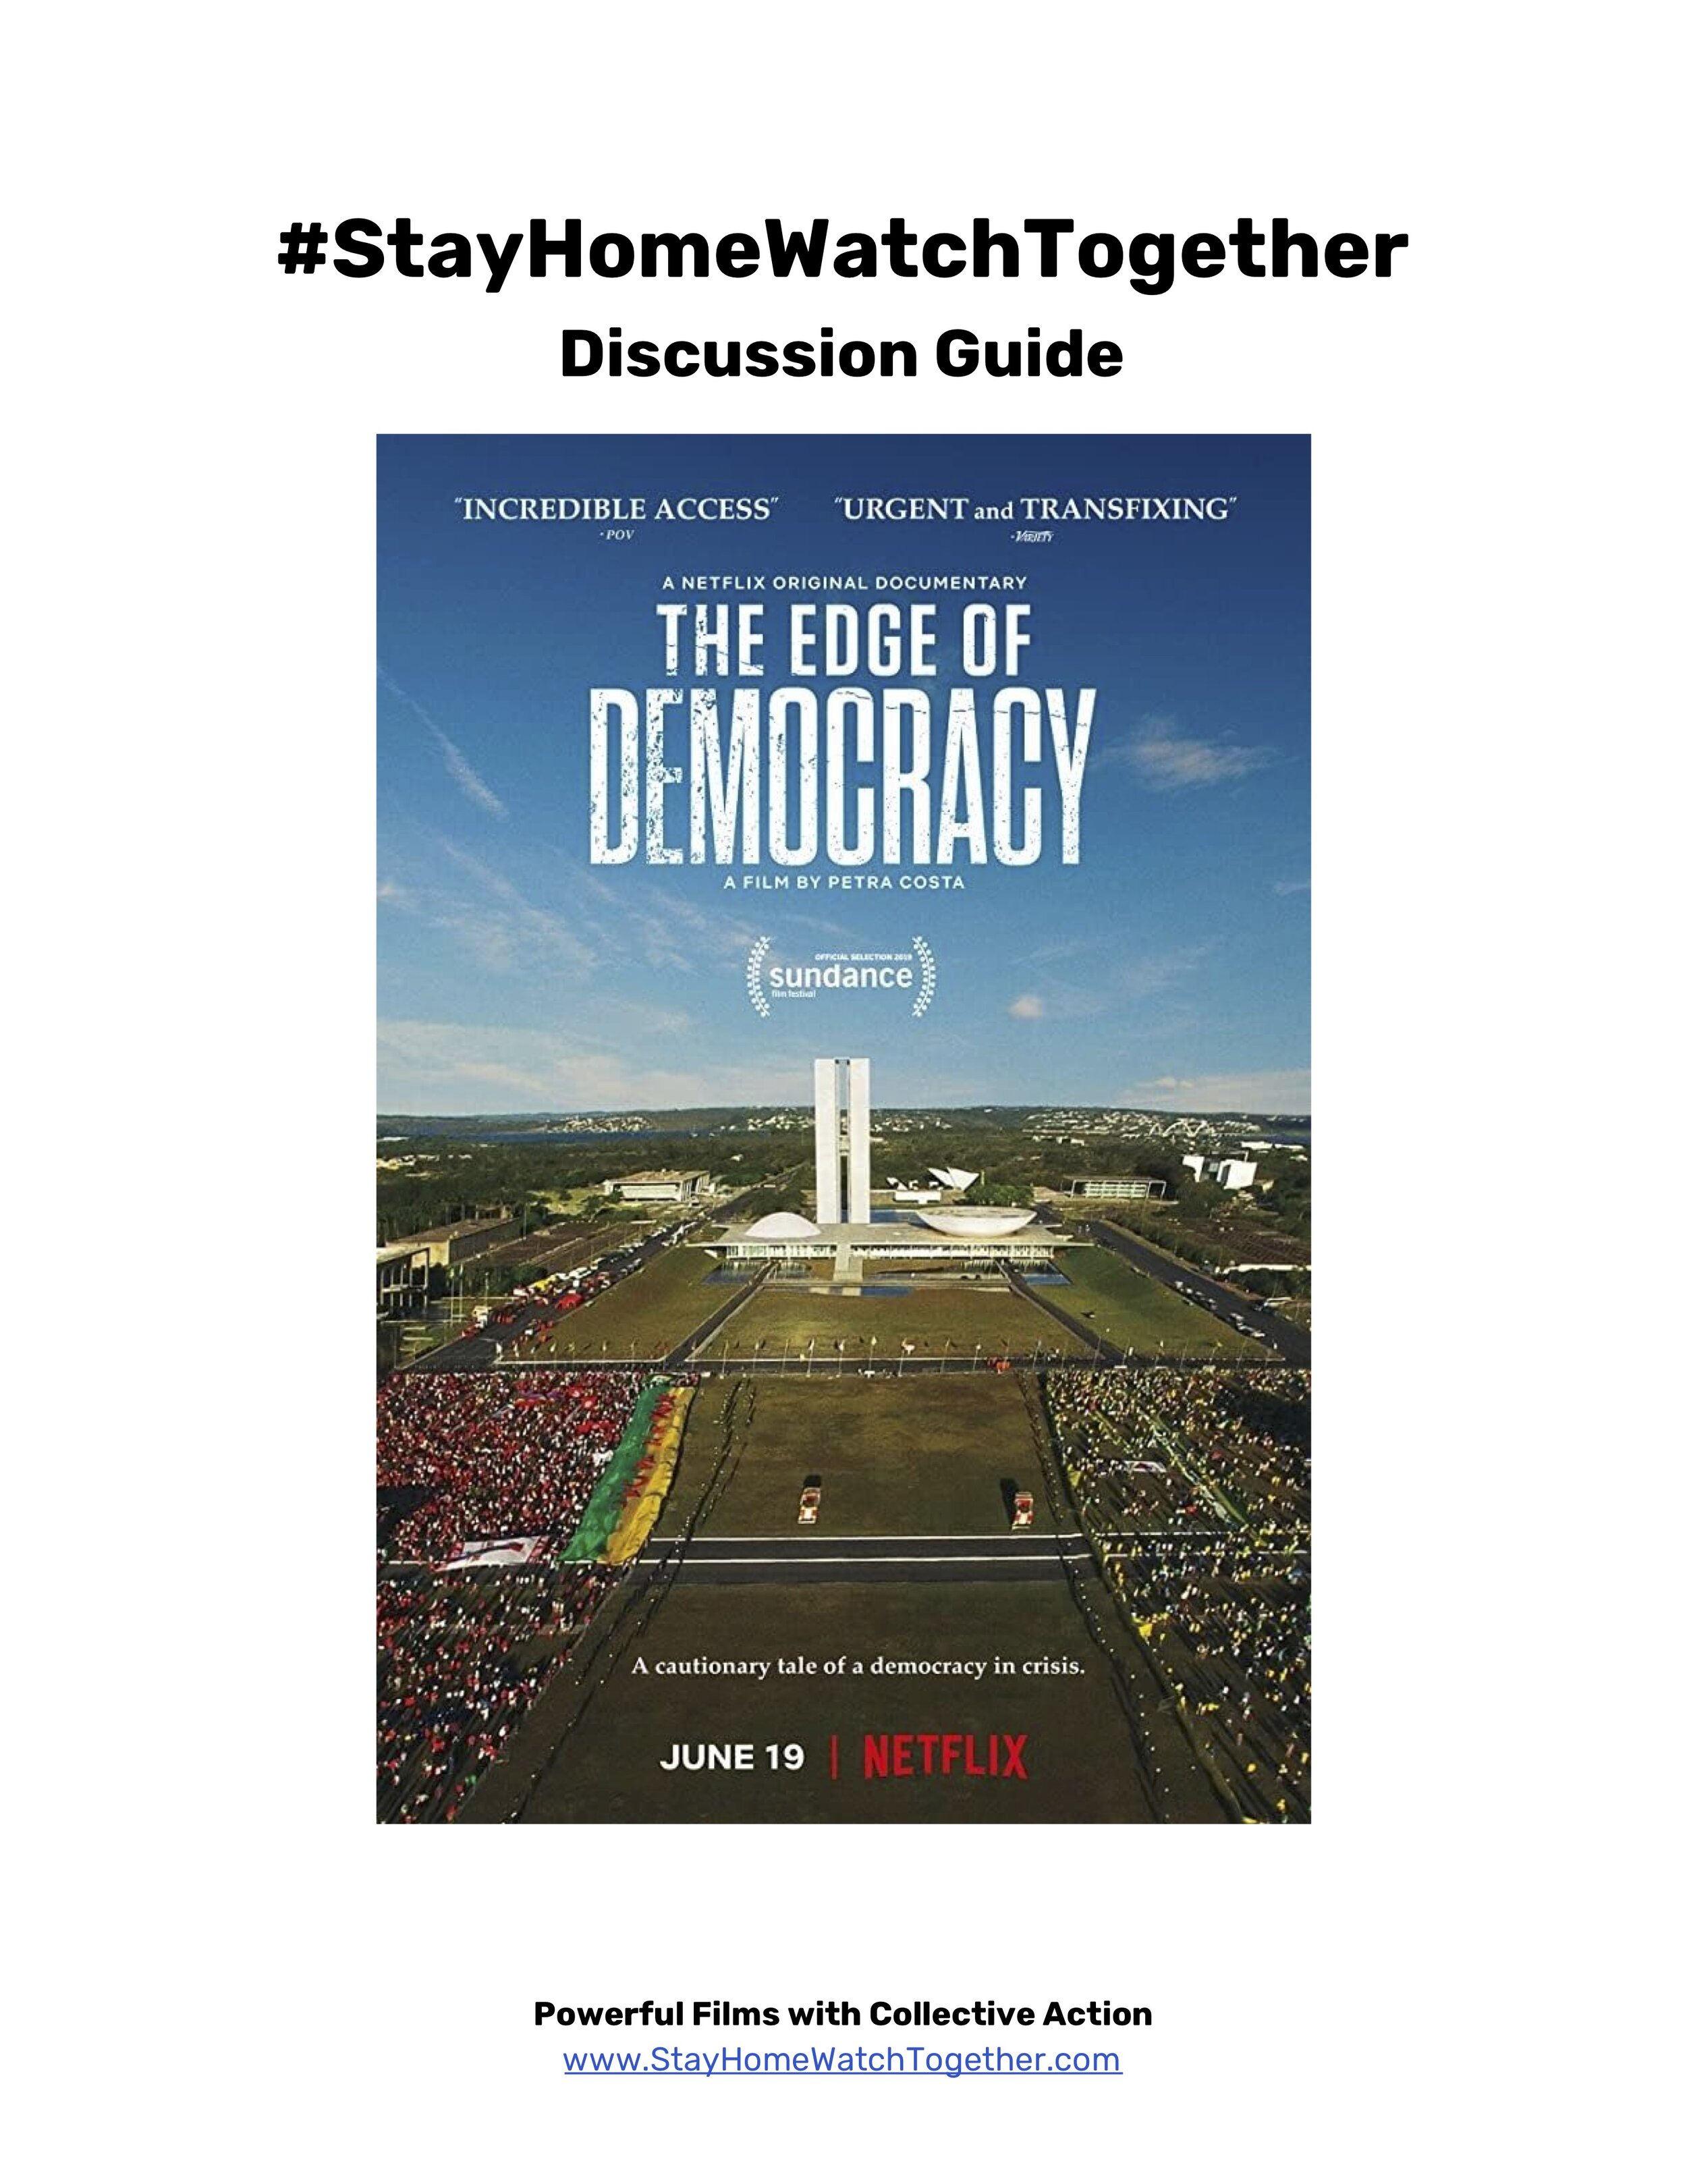 #SHWT DG_THE EDGE OF DEMOCRACY.jpg